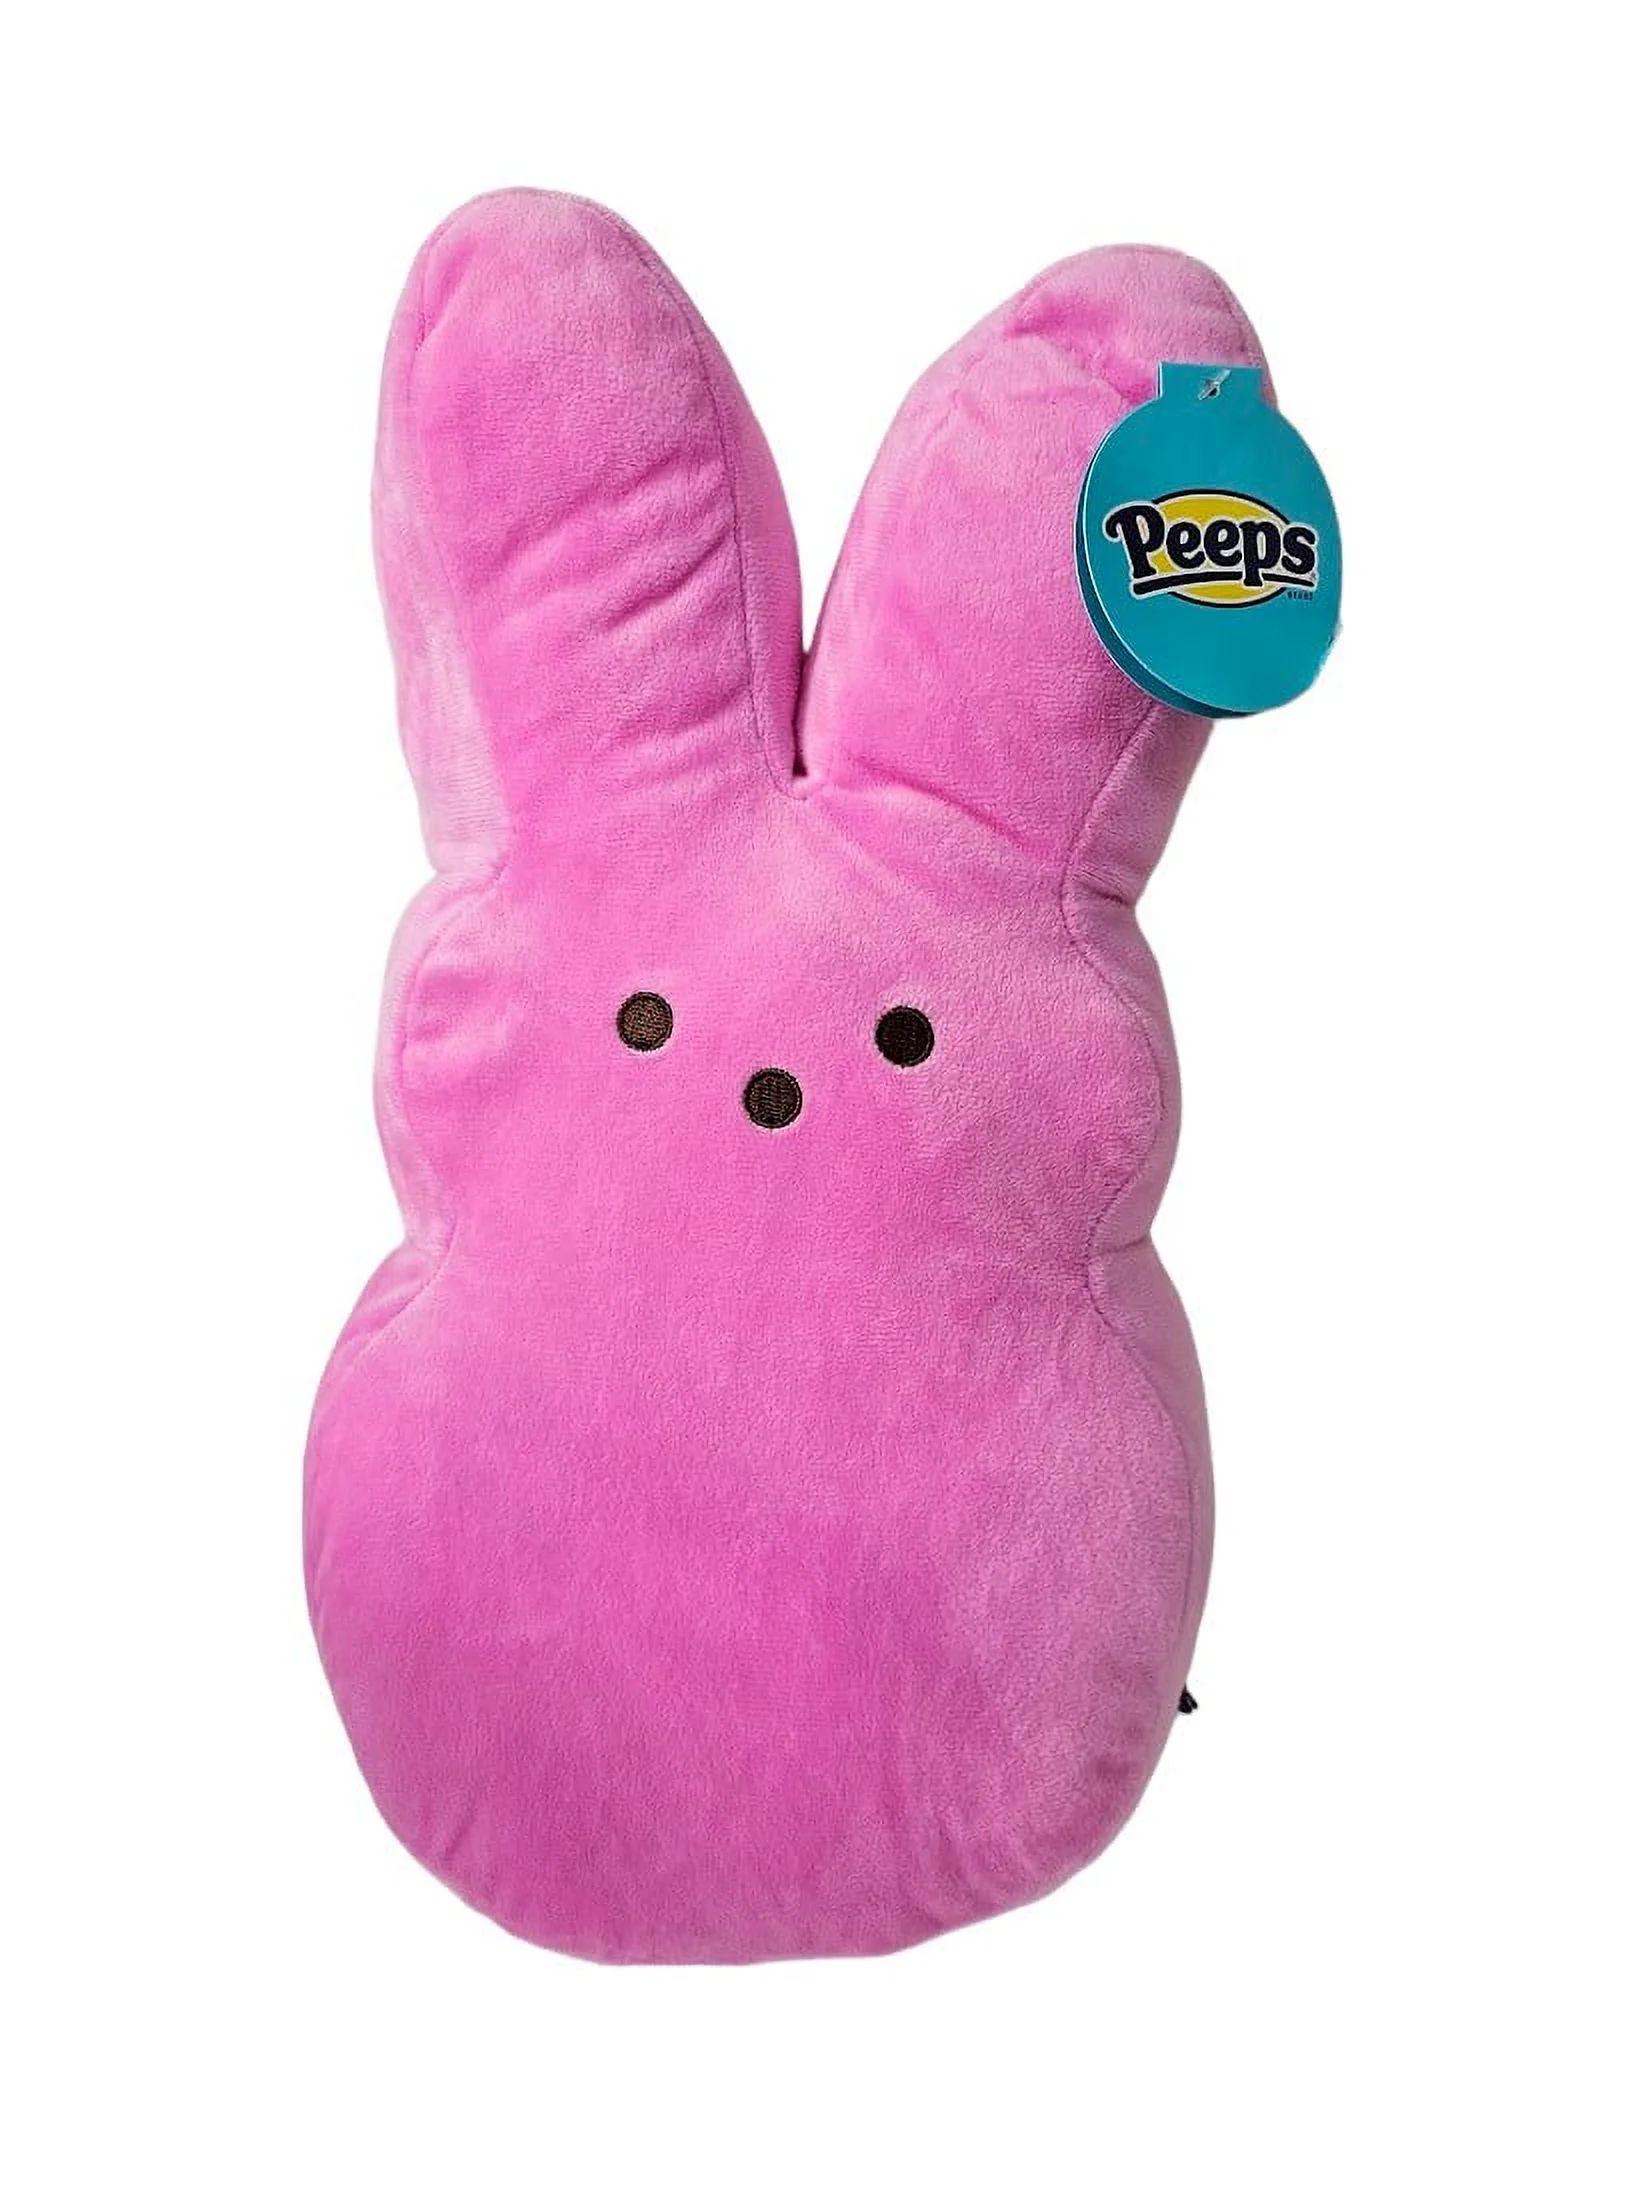 Peeps Large Marshmallow Bunny Easter Plush, 15-in - Pink | Walmart (US)